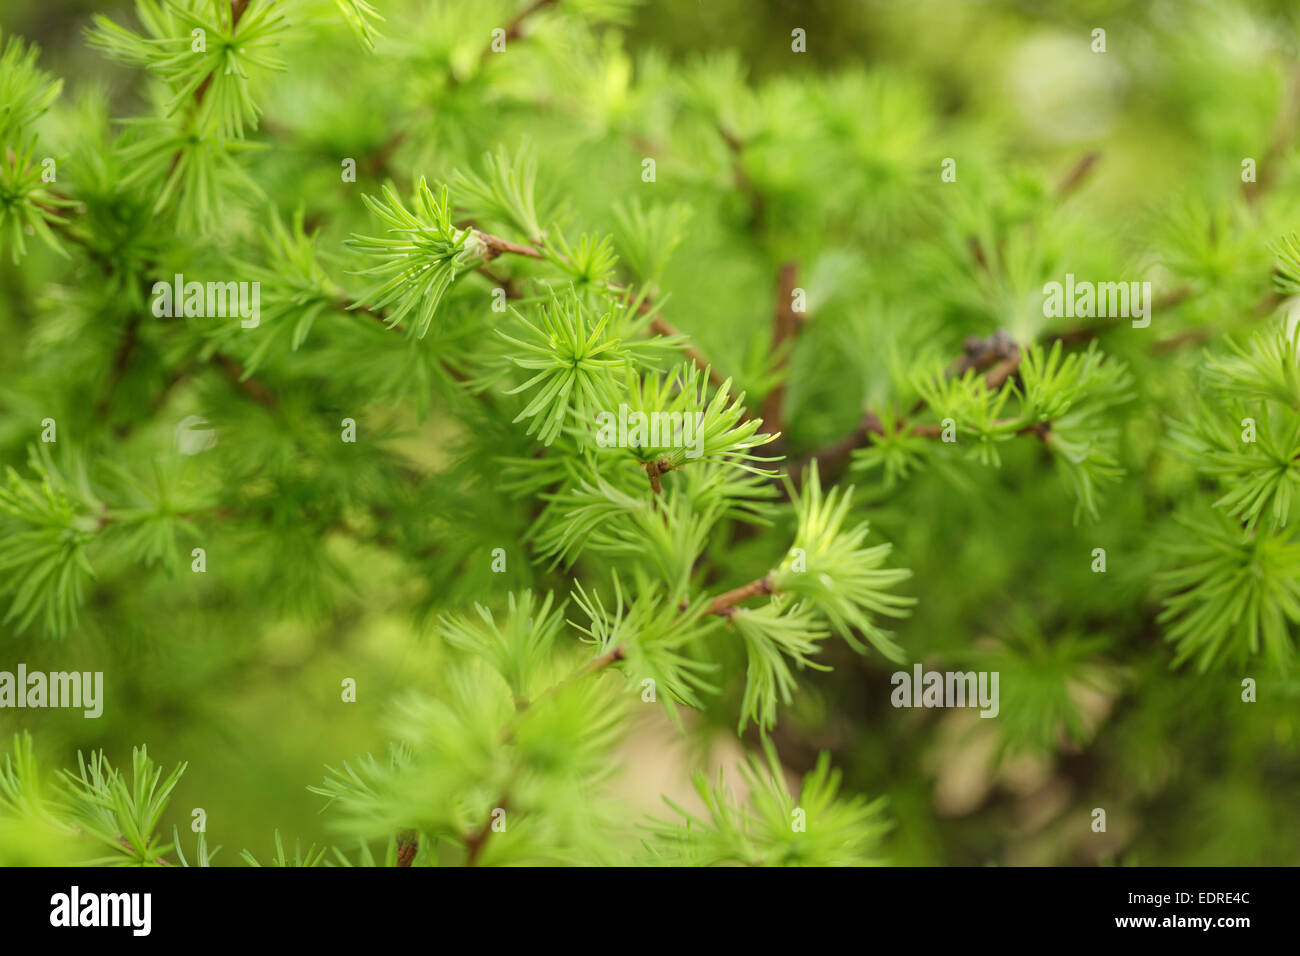 small larix tree leaves close up, springtime photo Stock Photo